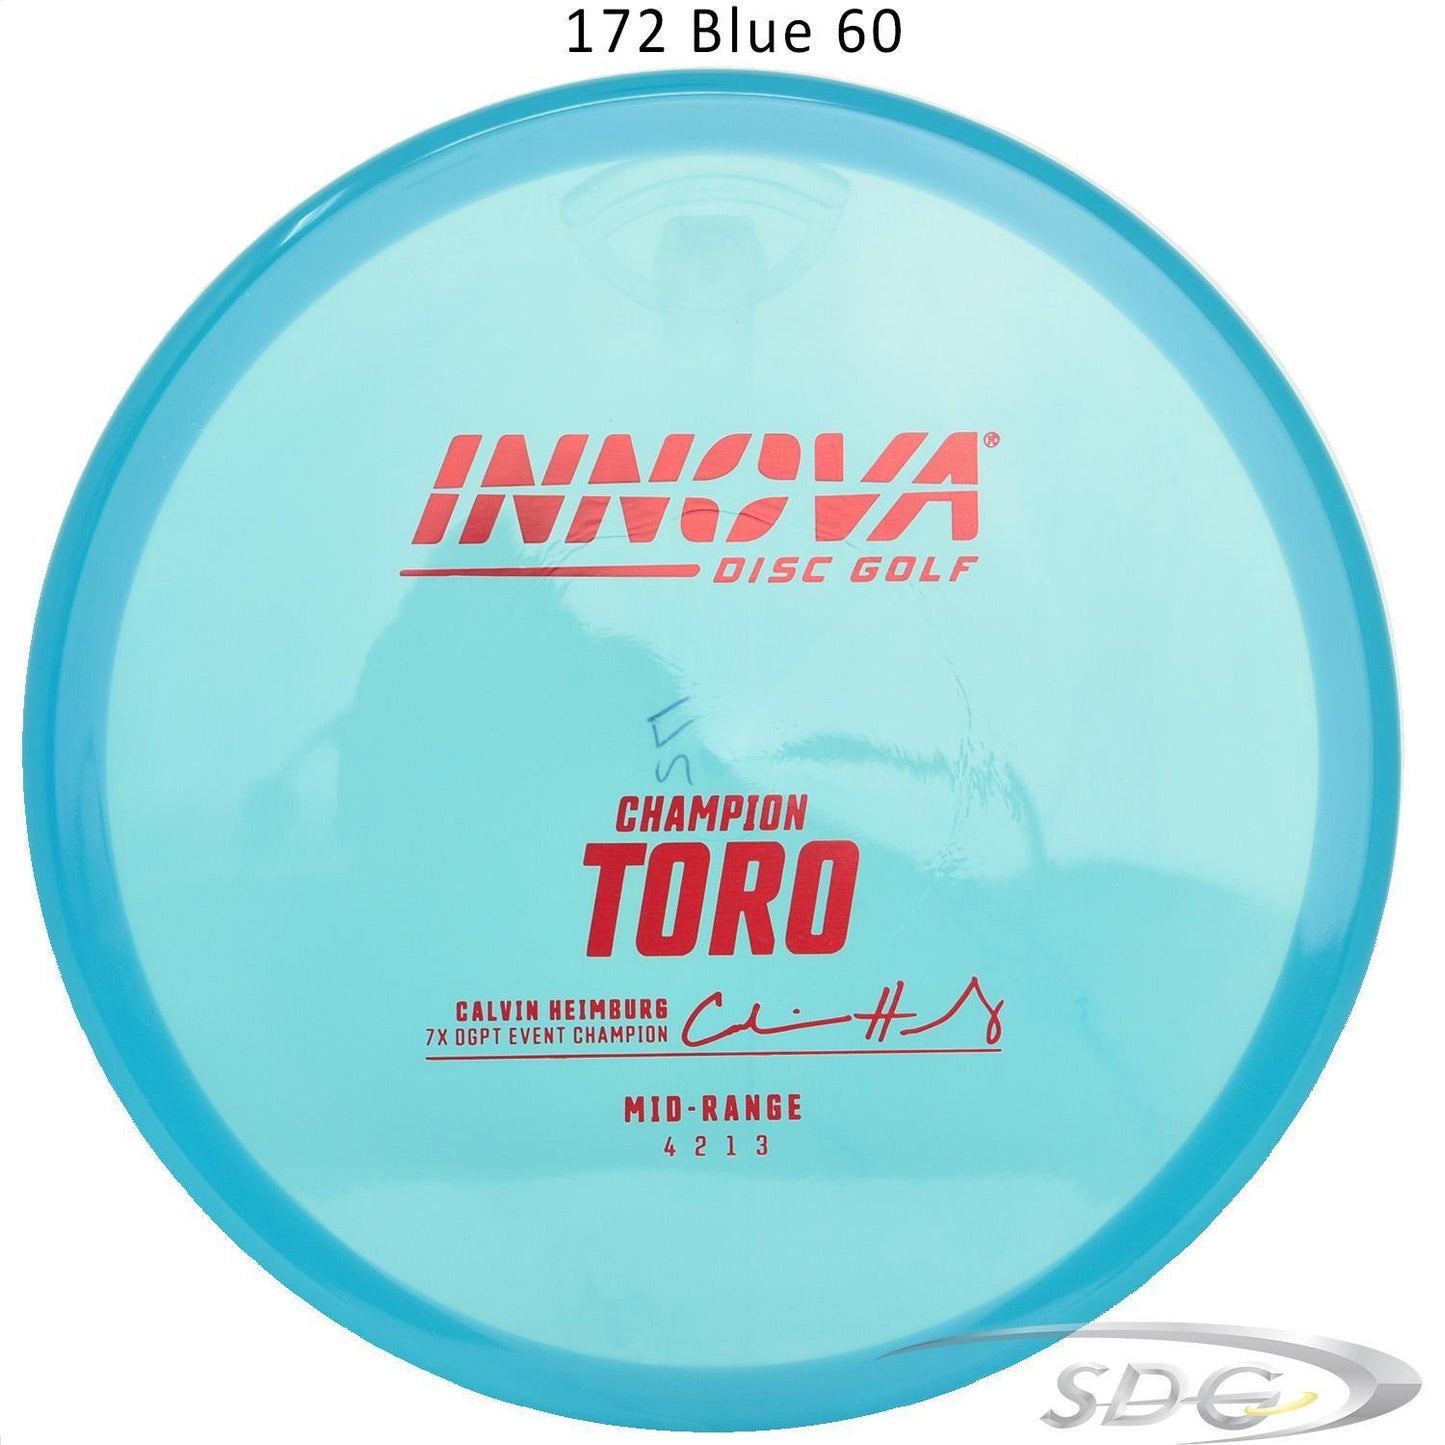 innova-champion-toro-calvin-heimburg-signature-disc-golf-mid-range 172 Blue 60 